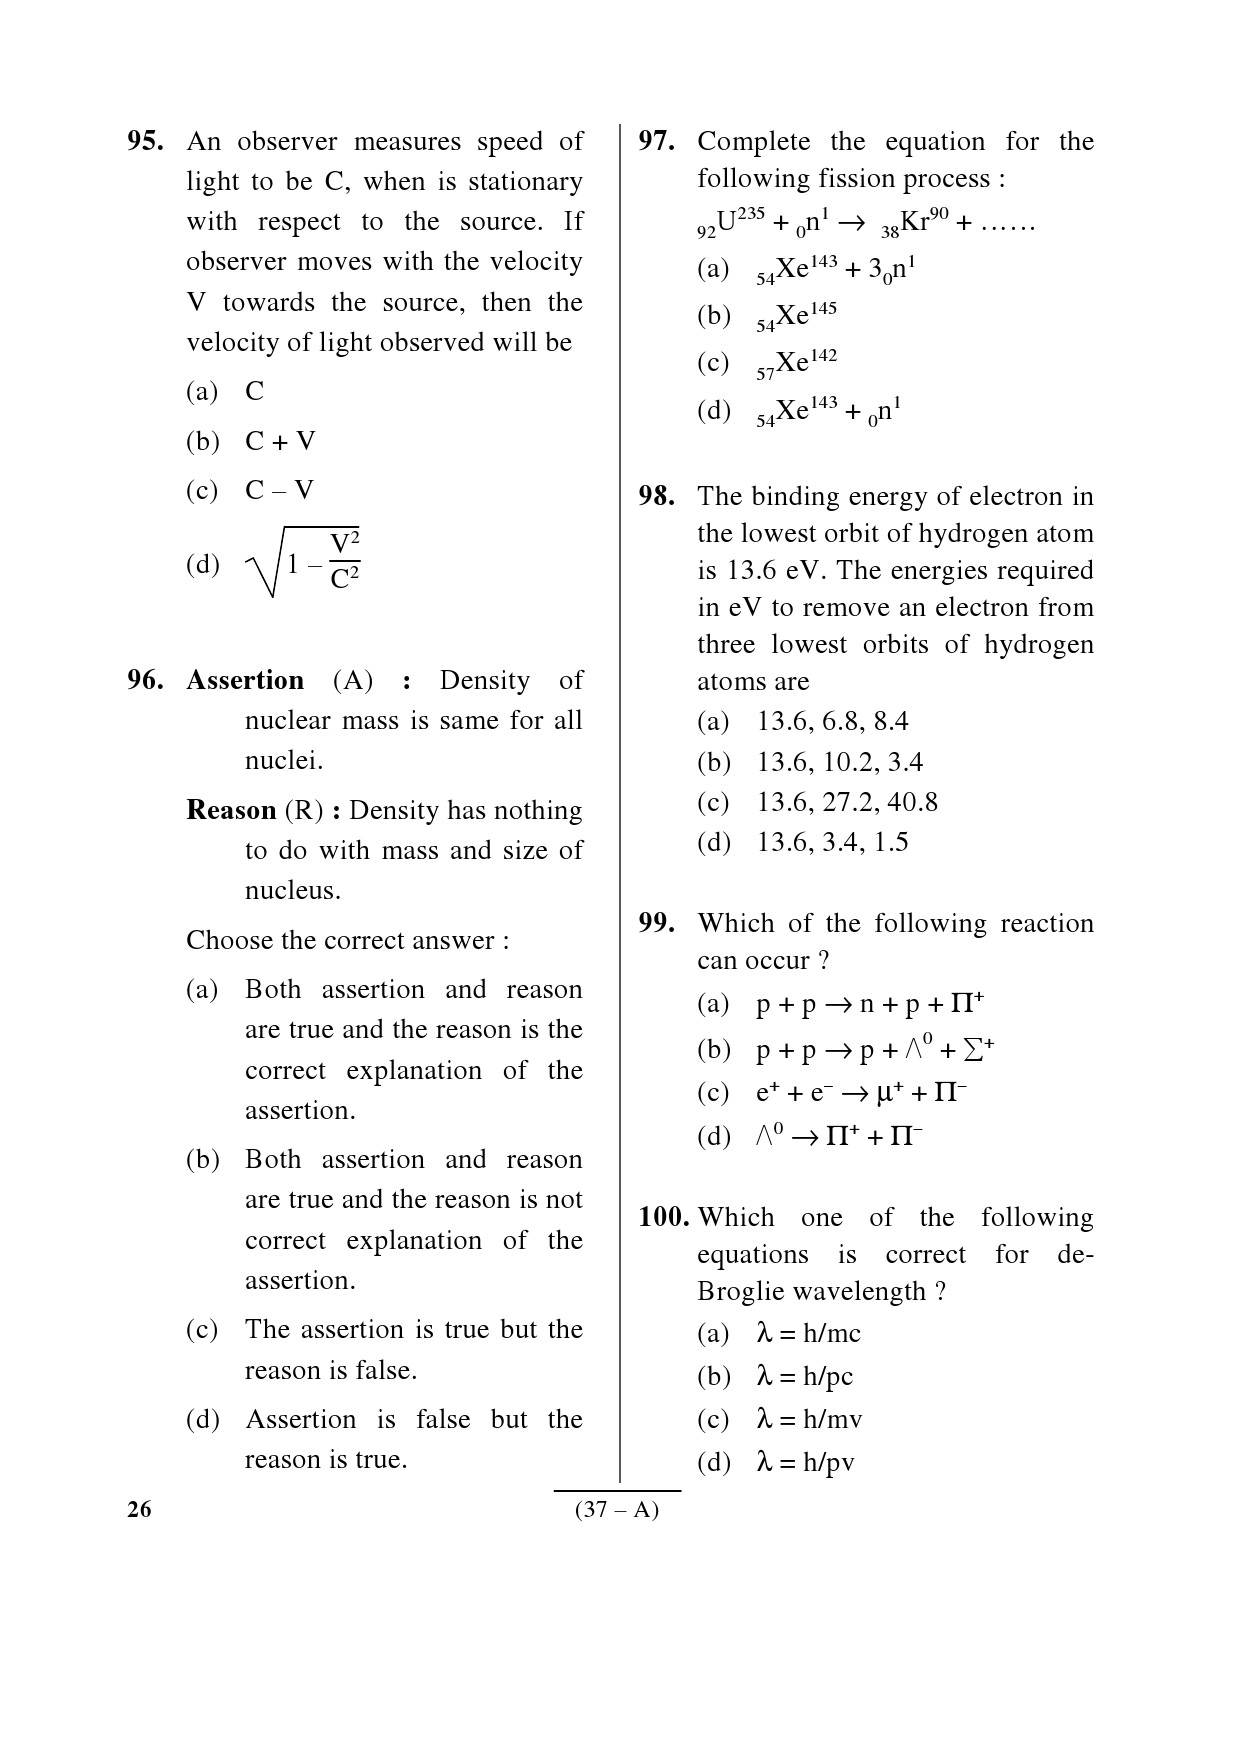 Karnataka PSC Mathematics Teacher Exam Sample Question Paper Subject code 26 37